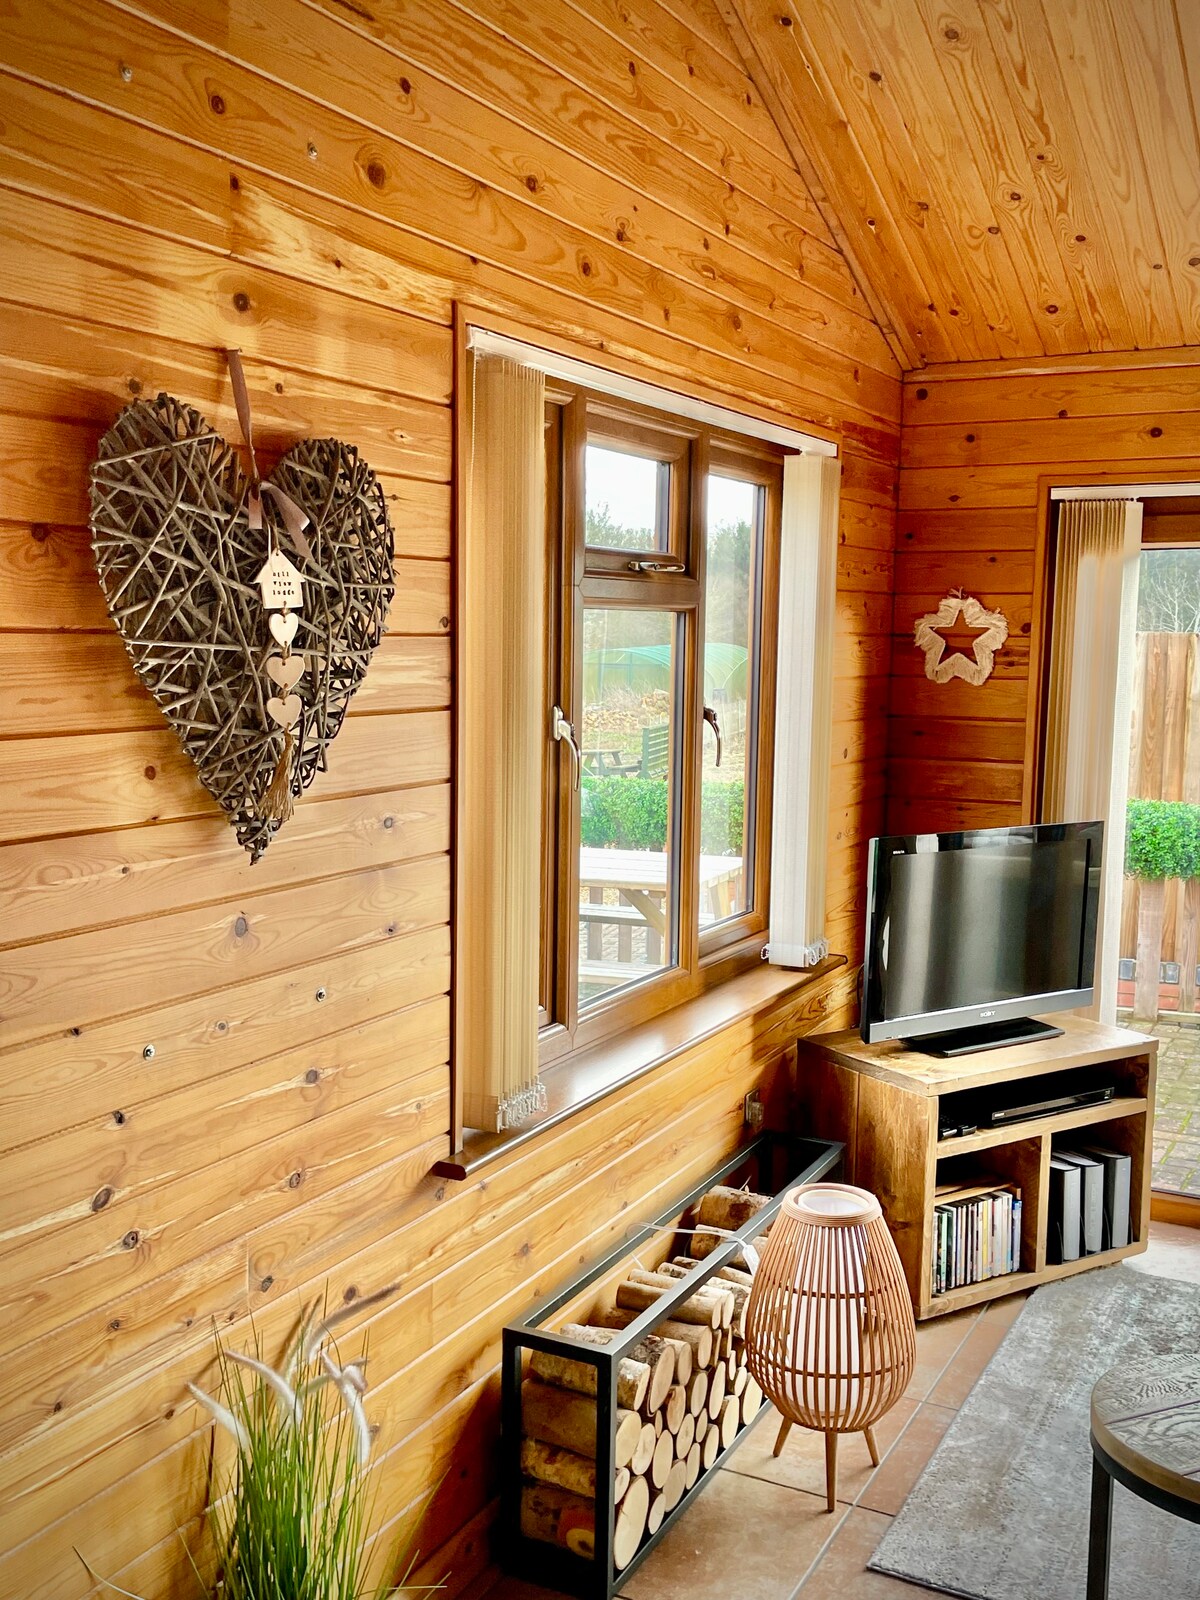 Hill View Lodge
Luxury Log Cabin